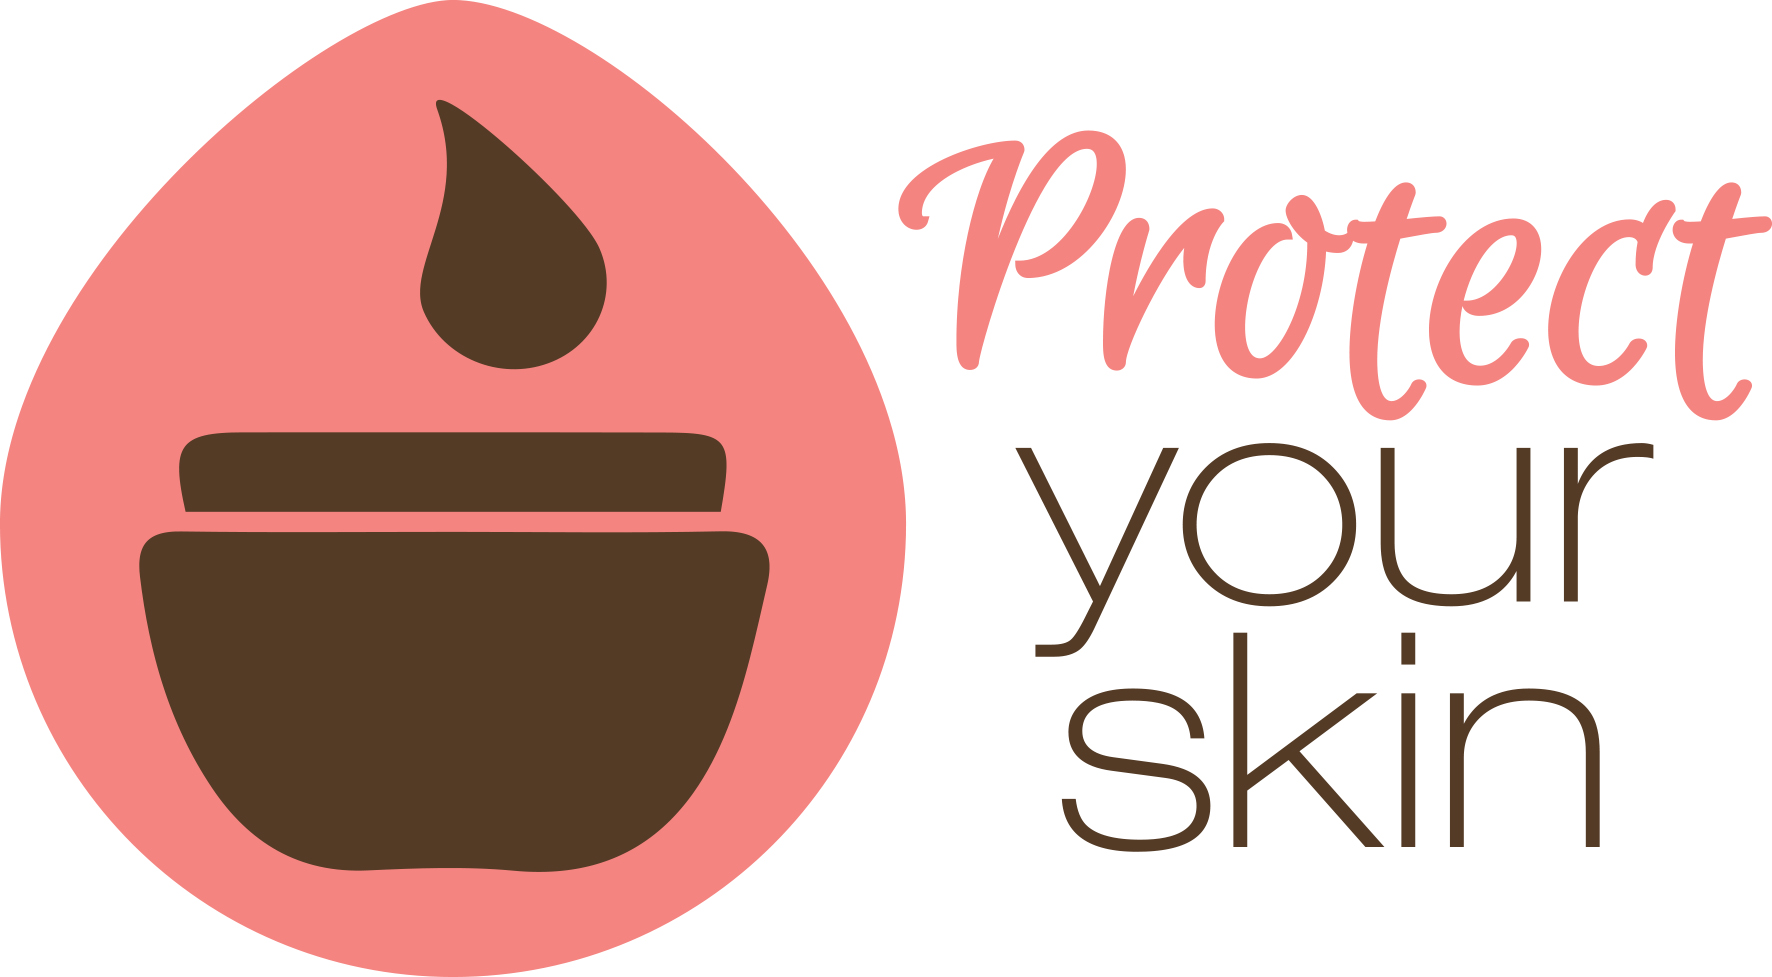 How to Protect Your Skin this Harmattan season.